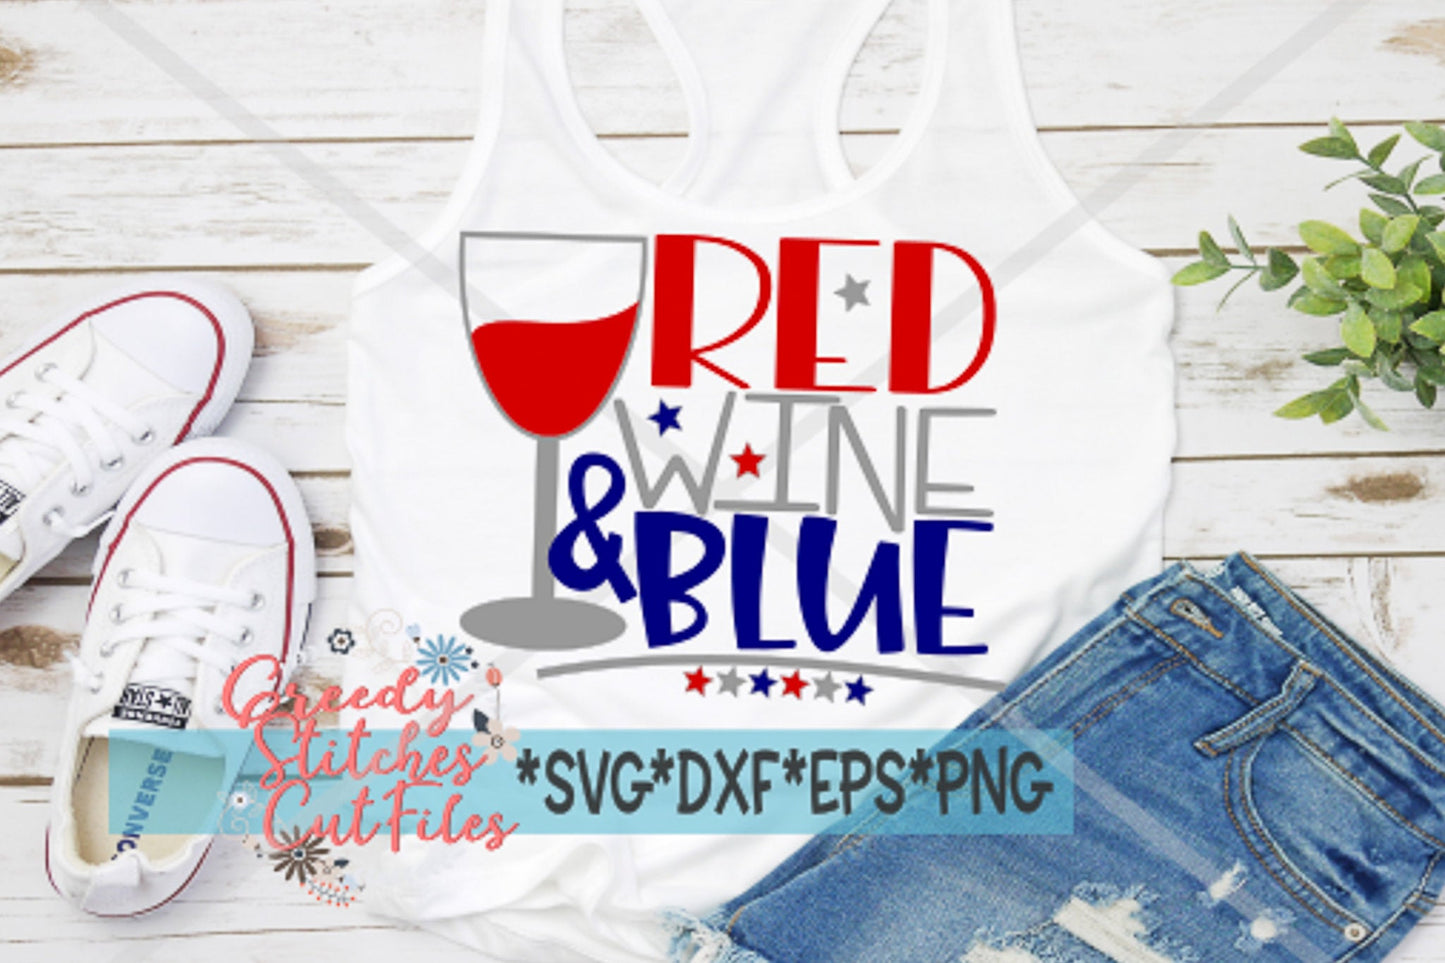 July 4th SvG | July 4 SvG | Red Wine & Blue SvG | July 4th Wine svg, dxf, eps, png 4th of July SvG | Wine SvG | Instant Download Cut File